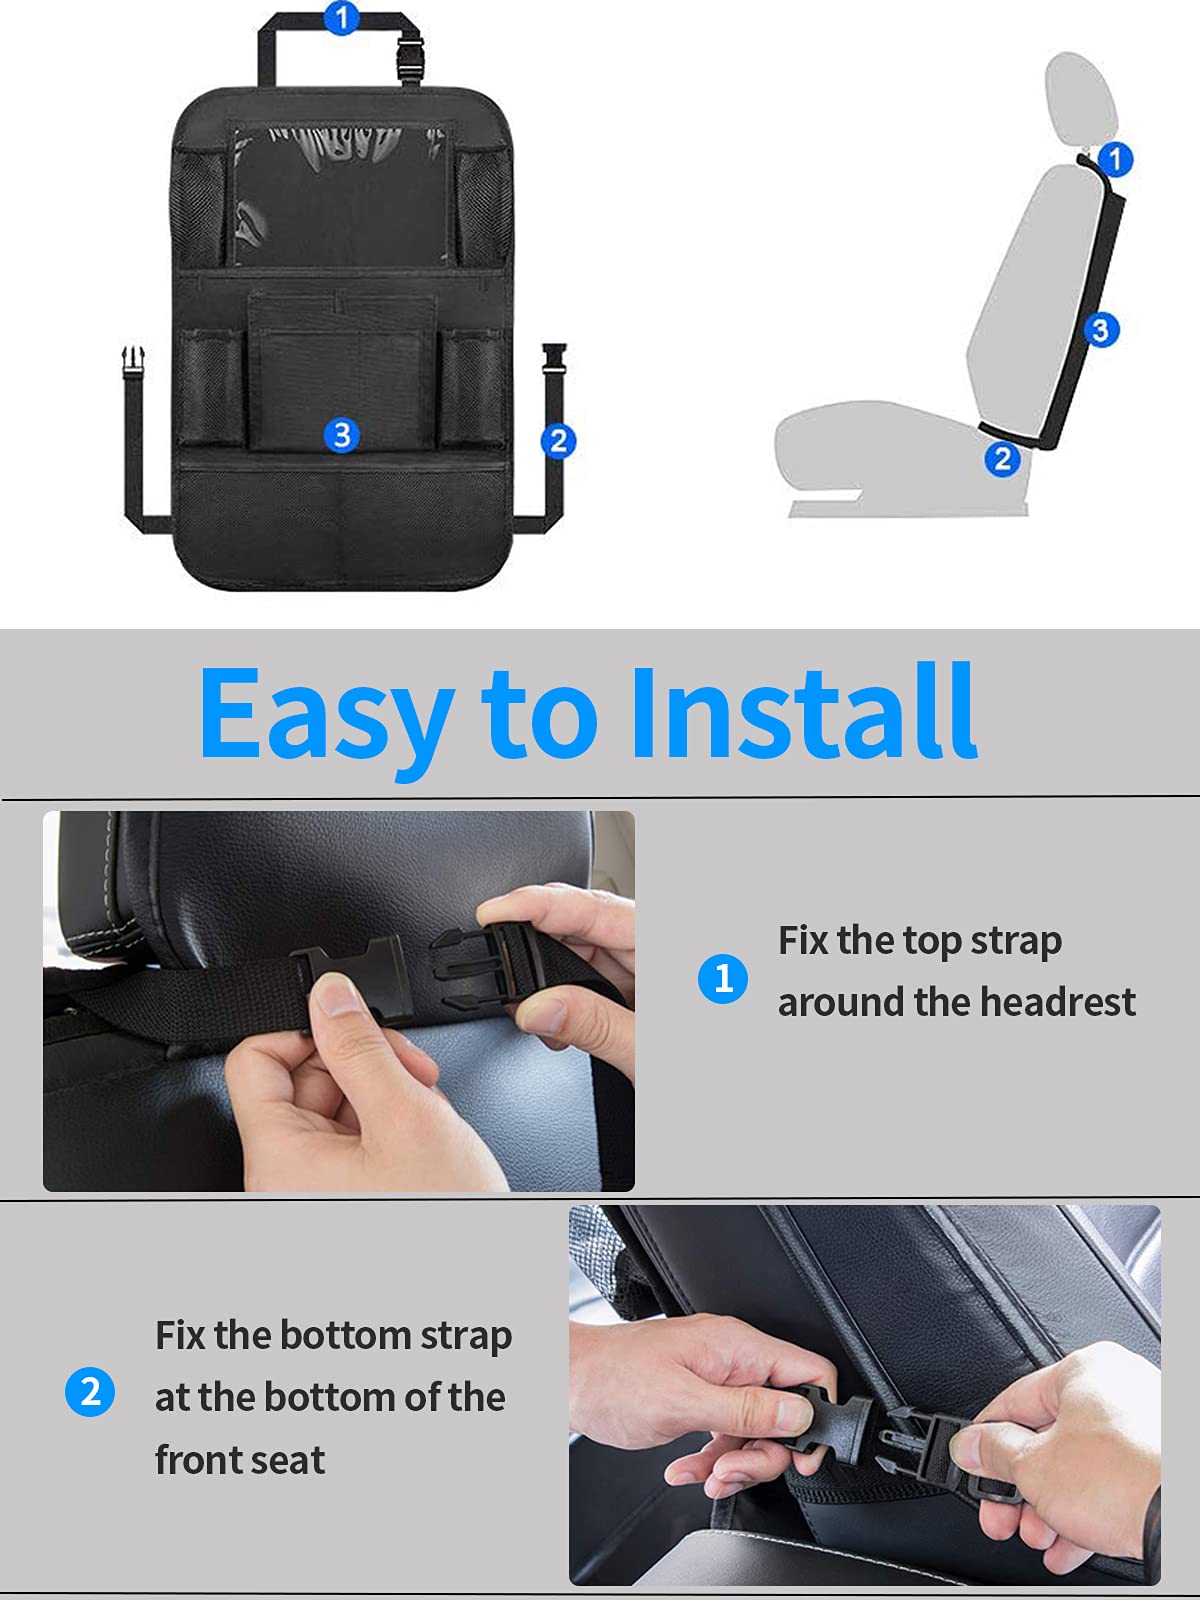 Ecurfu Backseat Car Organizer, Back Seat Protectors Kick Mats, Car Storage Bag with iPad Tablet Holder + 9 Storage Pockets for Kids Toddlers, Travel Accessories (1PC)